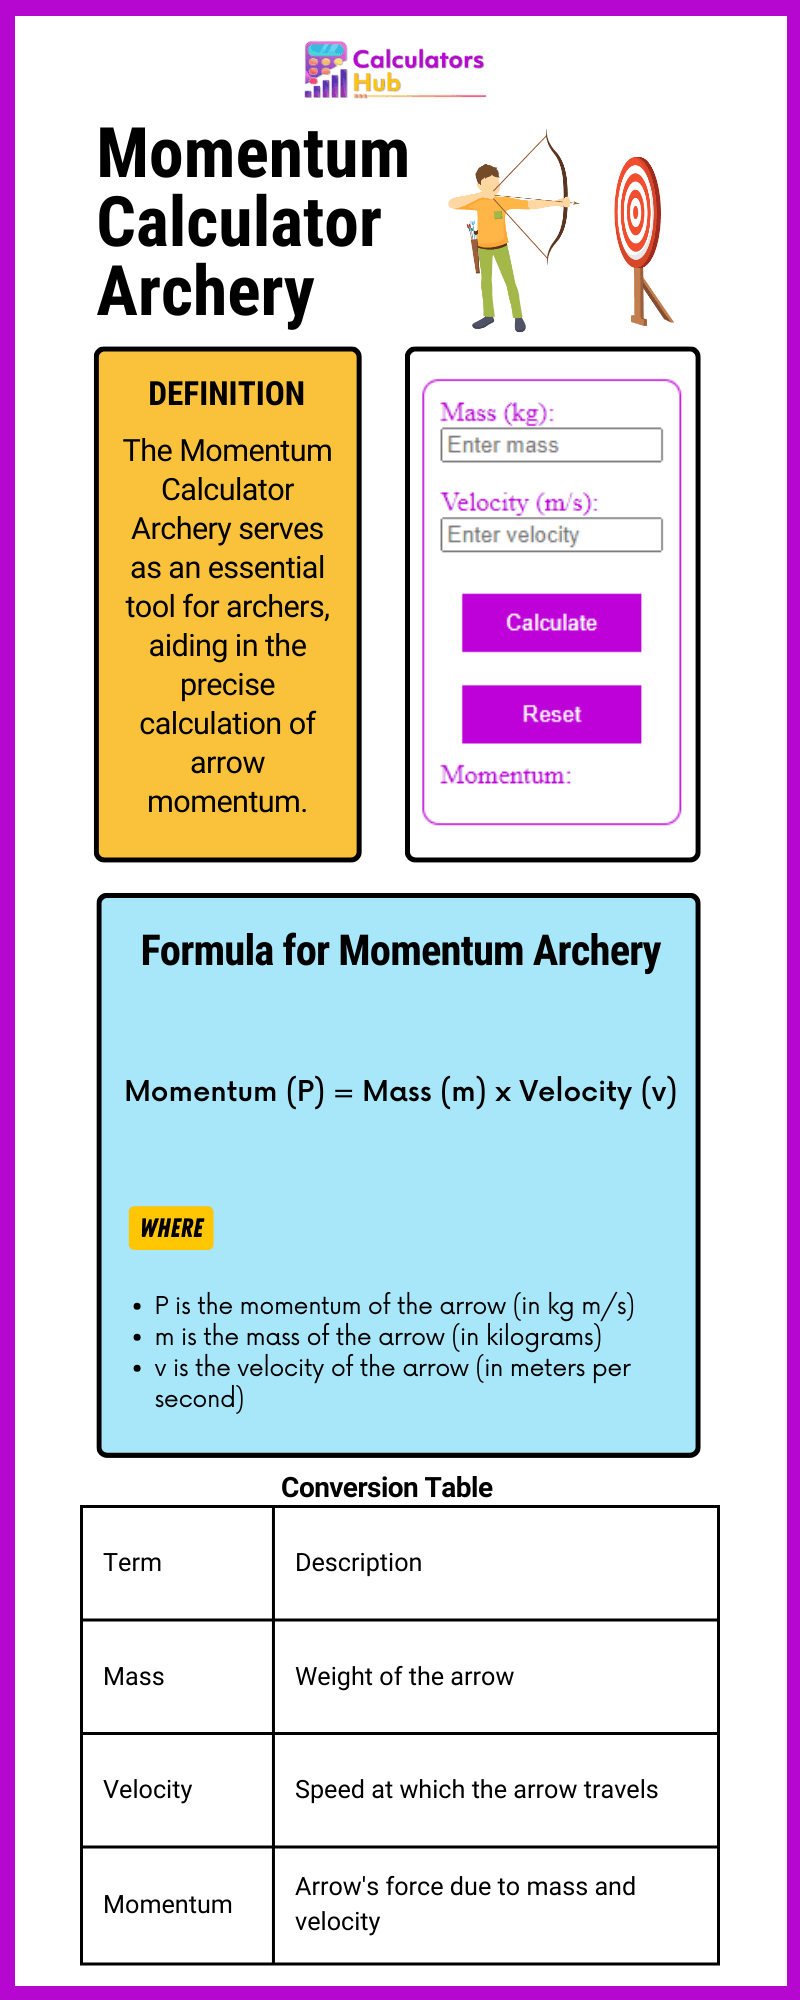 Momentum Calculator Archery